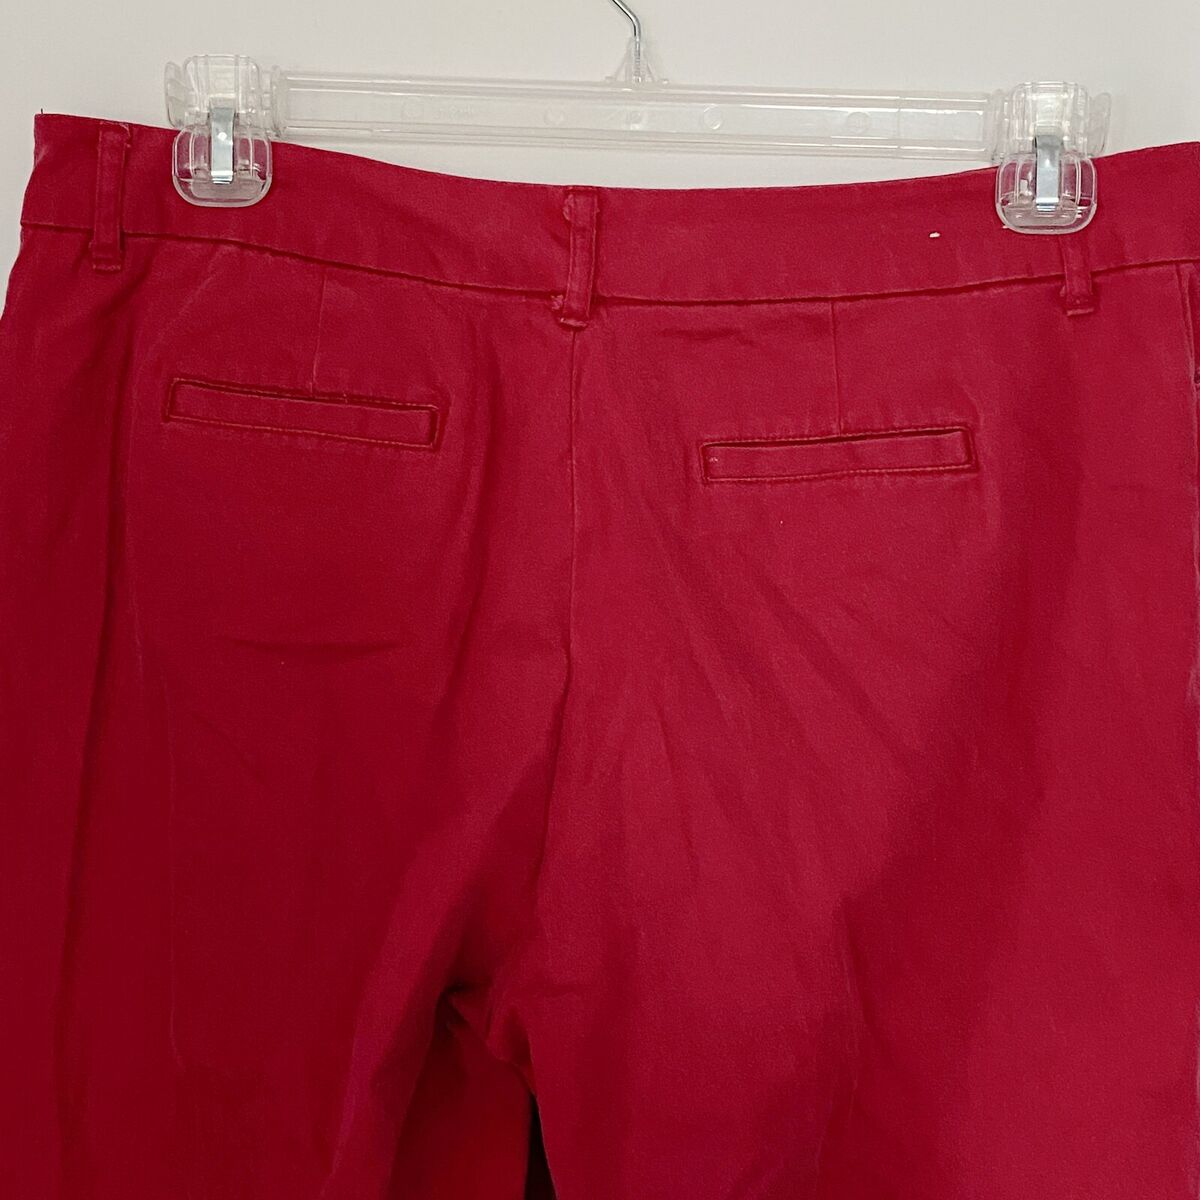 ST. JOHN'S BAY Women's Red Capris dress Pockets Pants Size 14 Petite